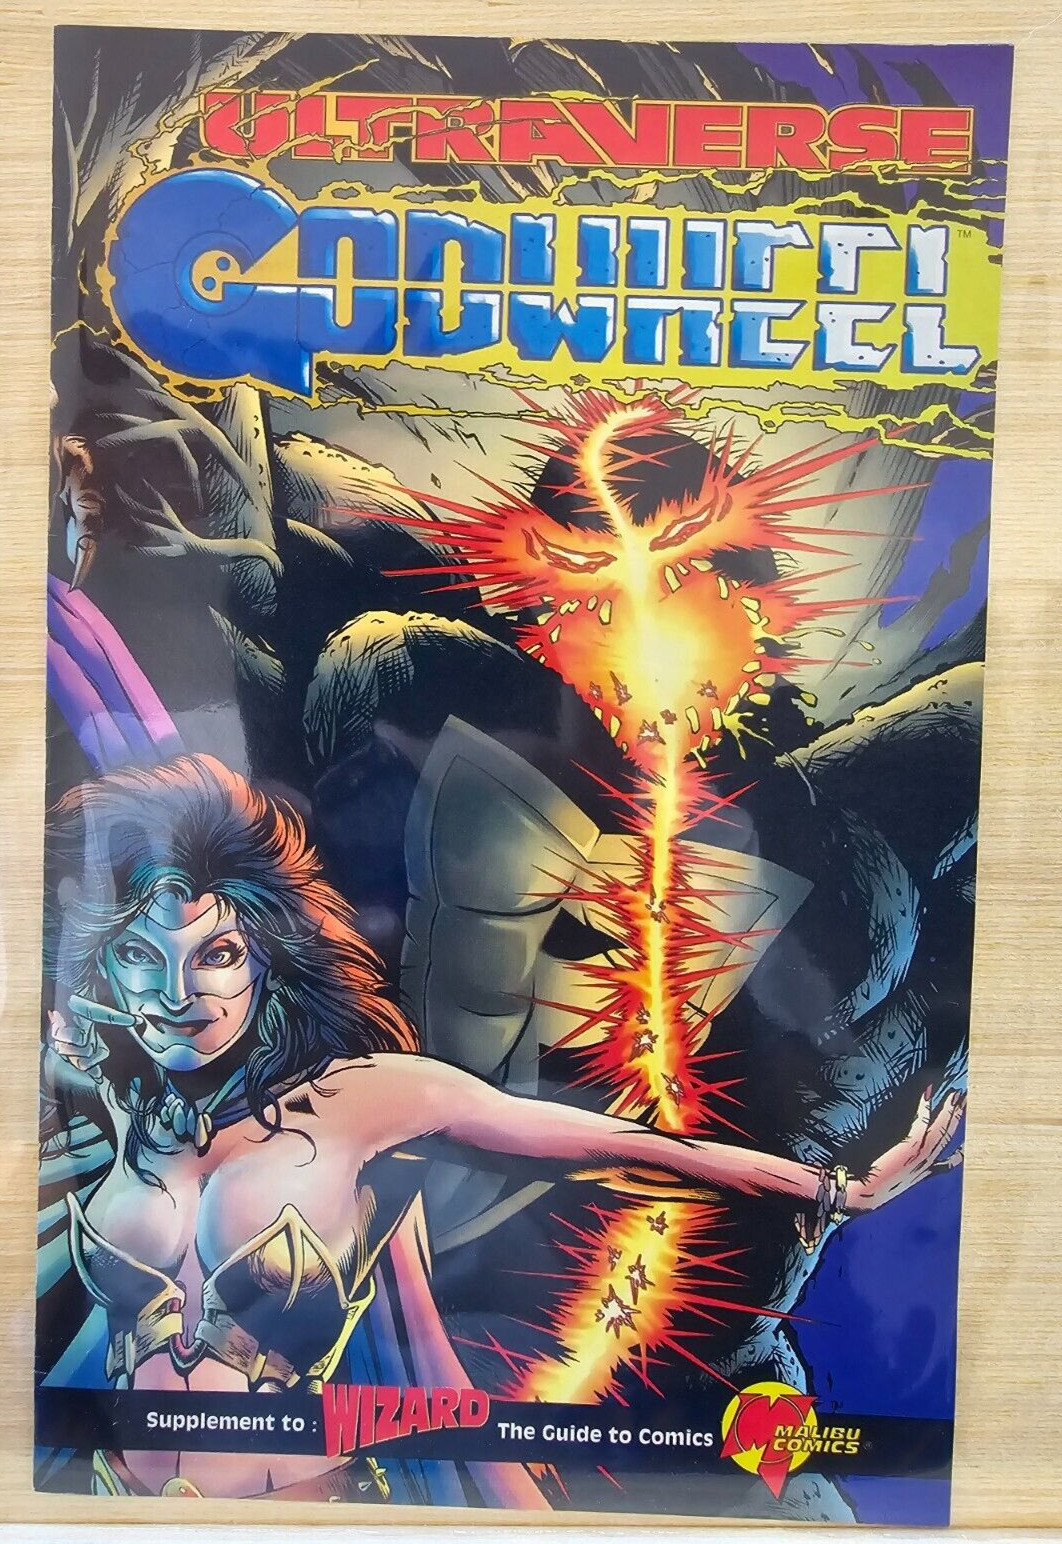 1994 Mini-Comic Ultraverse Godwheel, Supplement to Wizard, The Guide to Comics